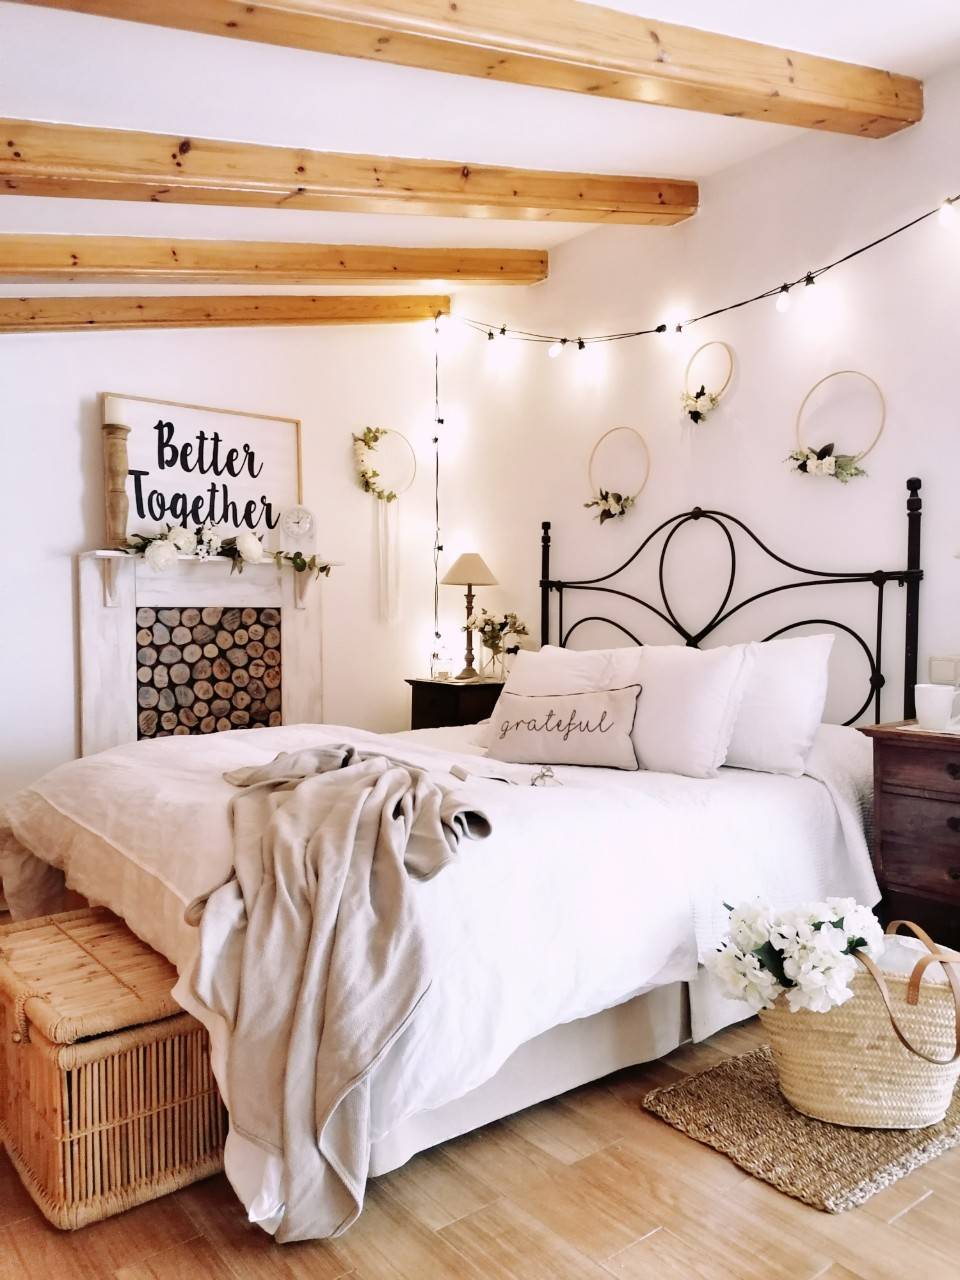 Dormitorio rústico con falsa chimenea pintada con chalk paint blanca 20200509 185805